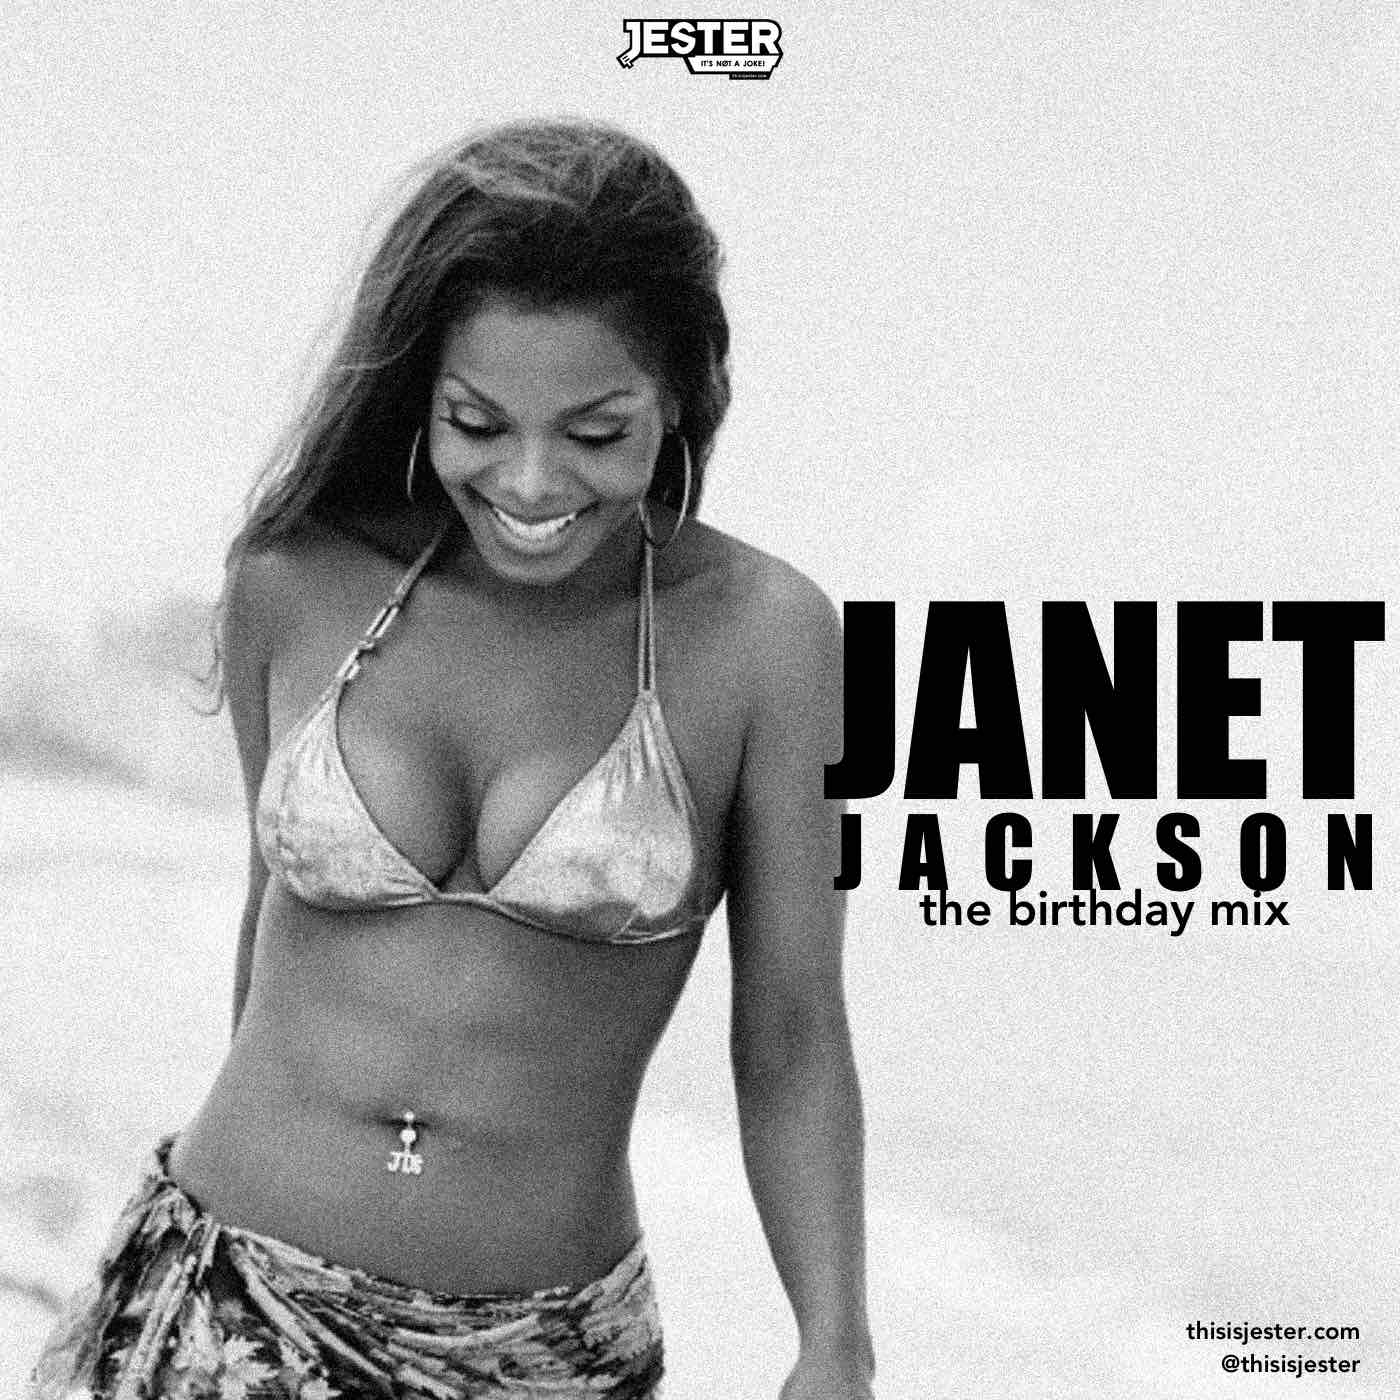 JANET JACKSON & Q TIP br /LET'S WAIT AWHILE RMX - JANET JACKSON br...